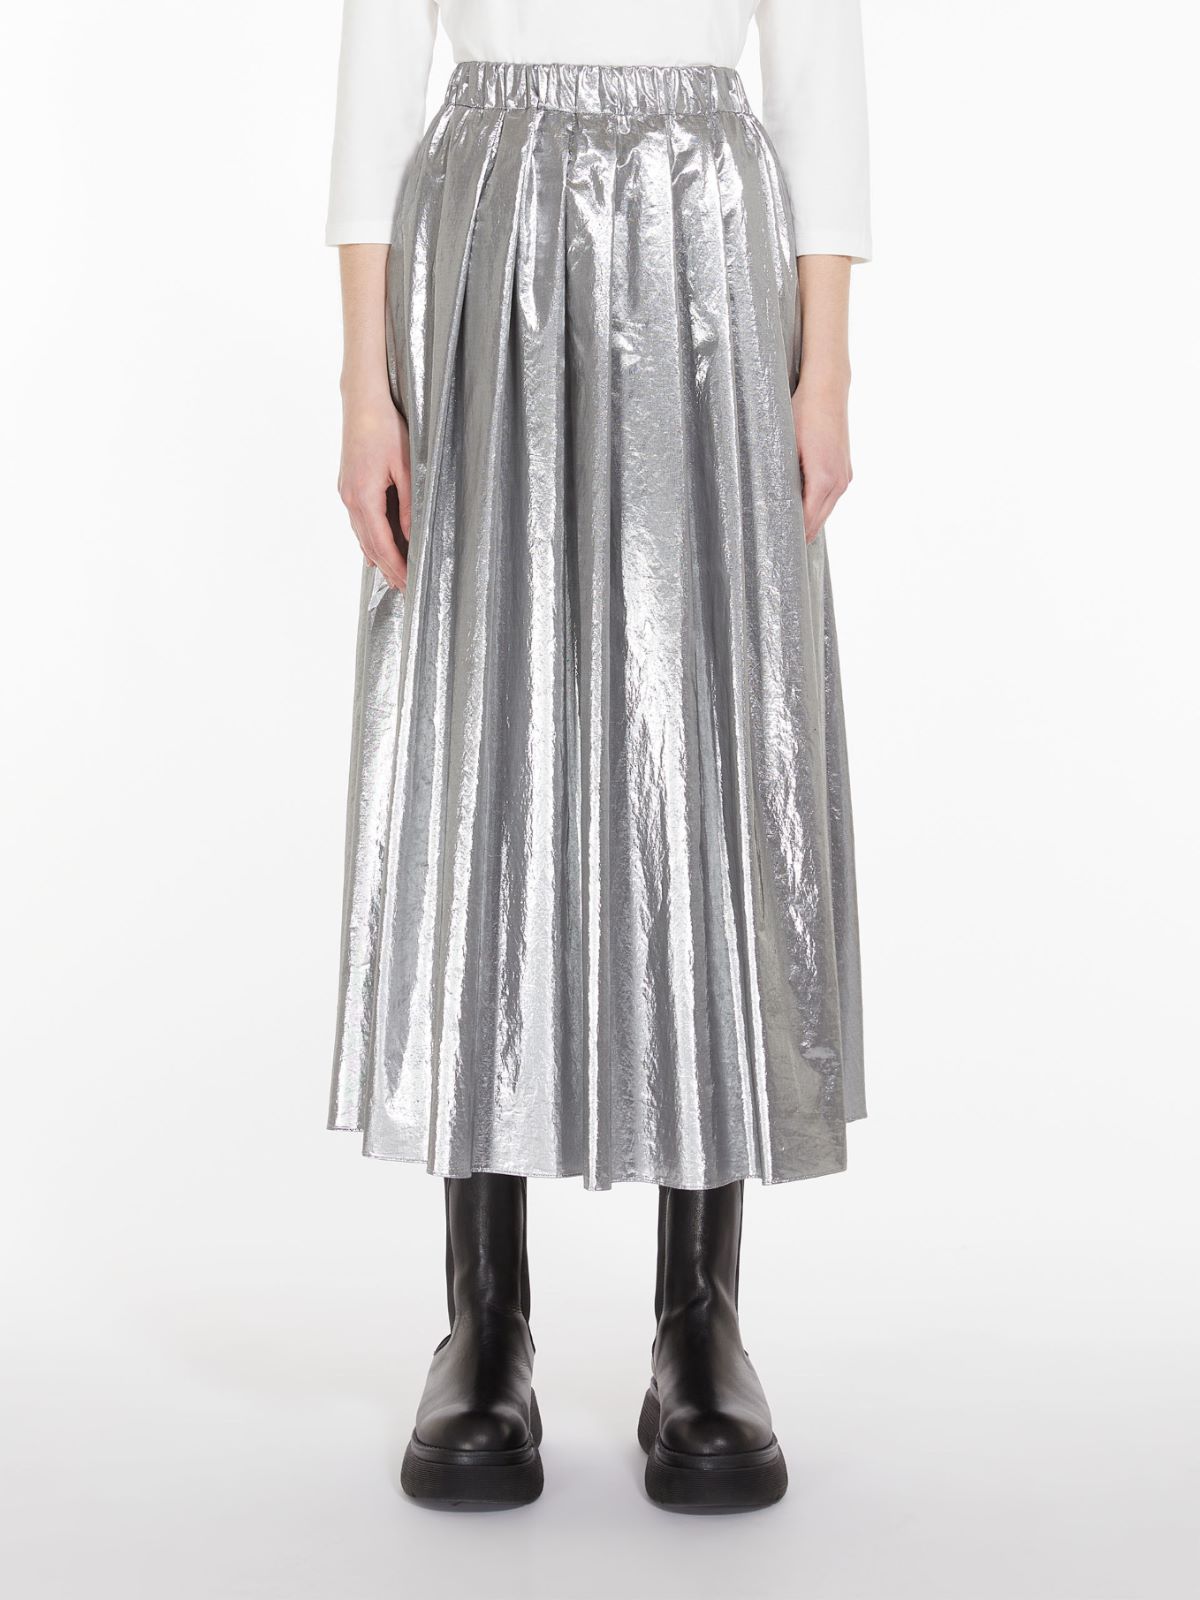 Full skirt in taffeta, silver | Weekend Max Mara